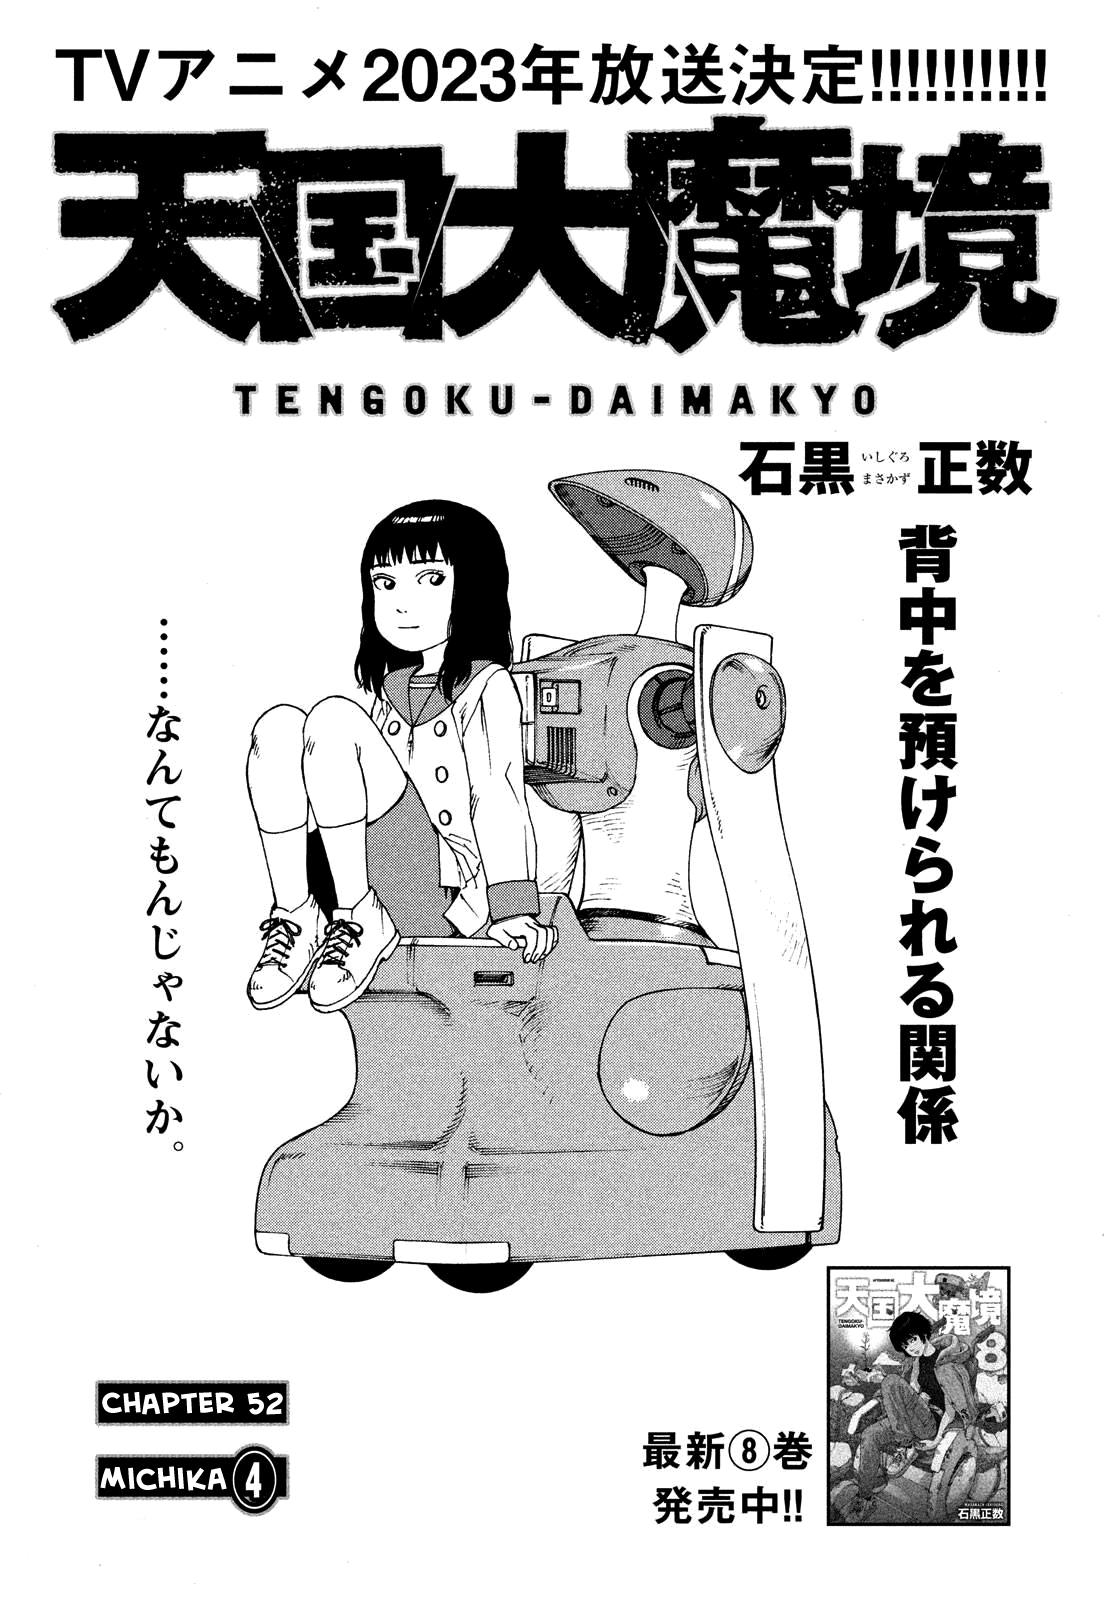 Tengoku Daimakyou - 12 - 43 - Lost in Anime